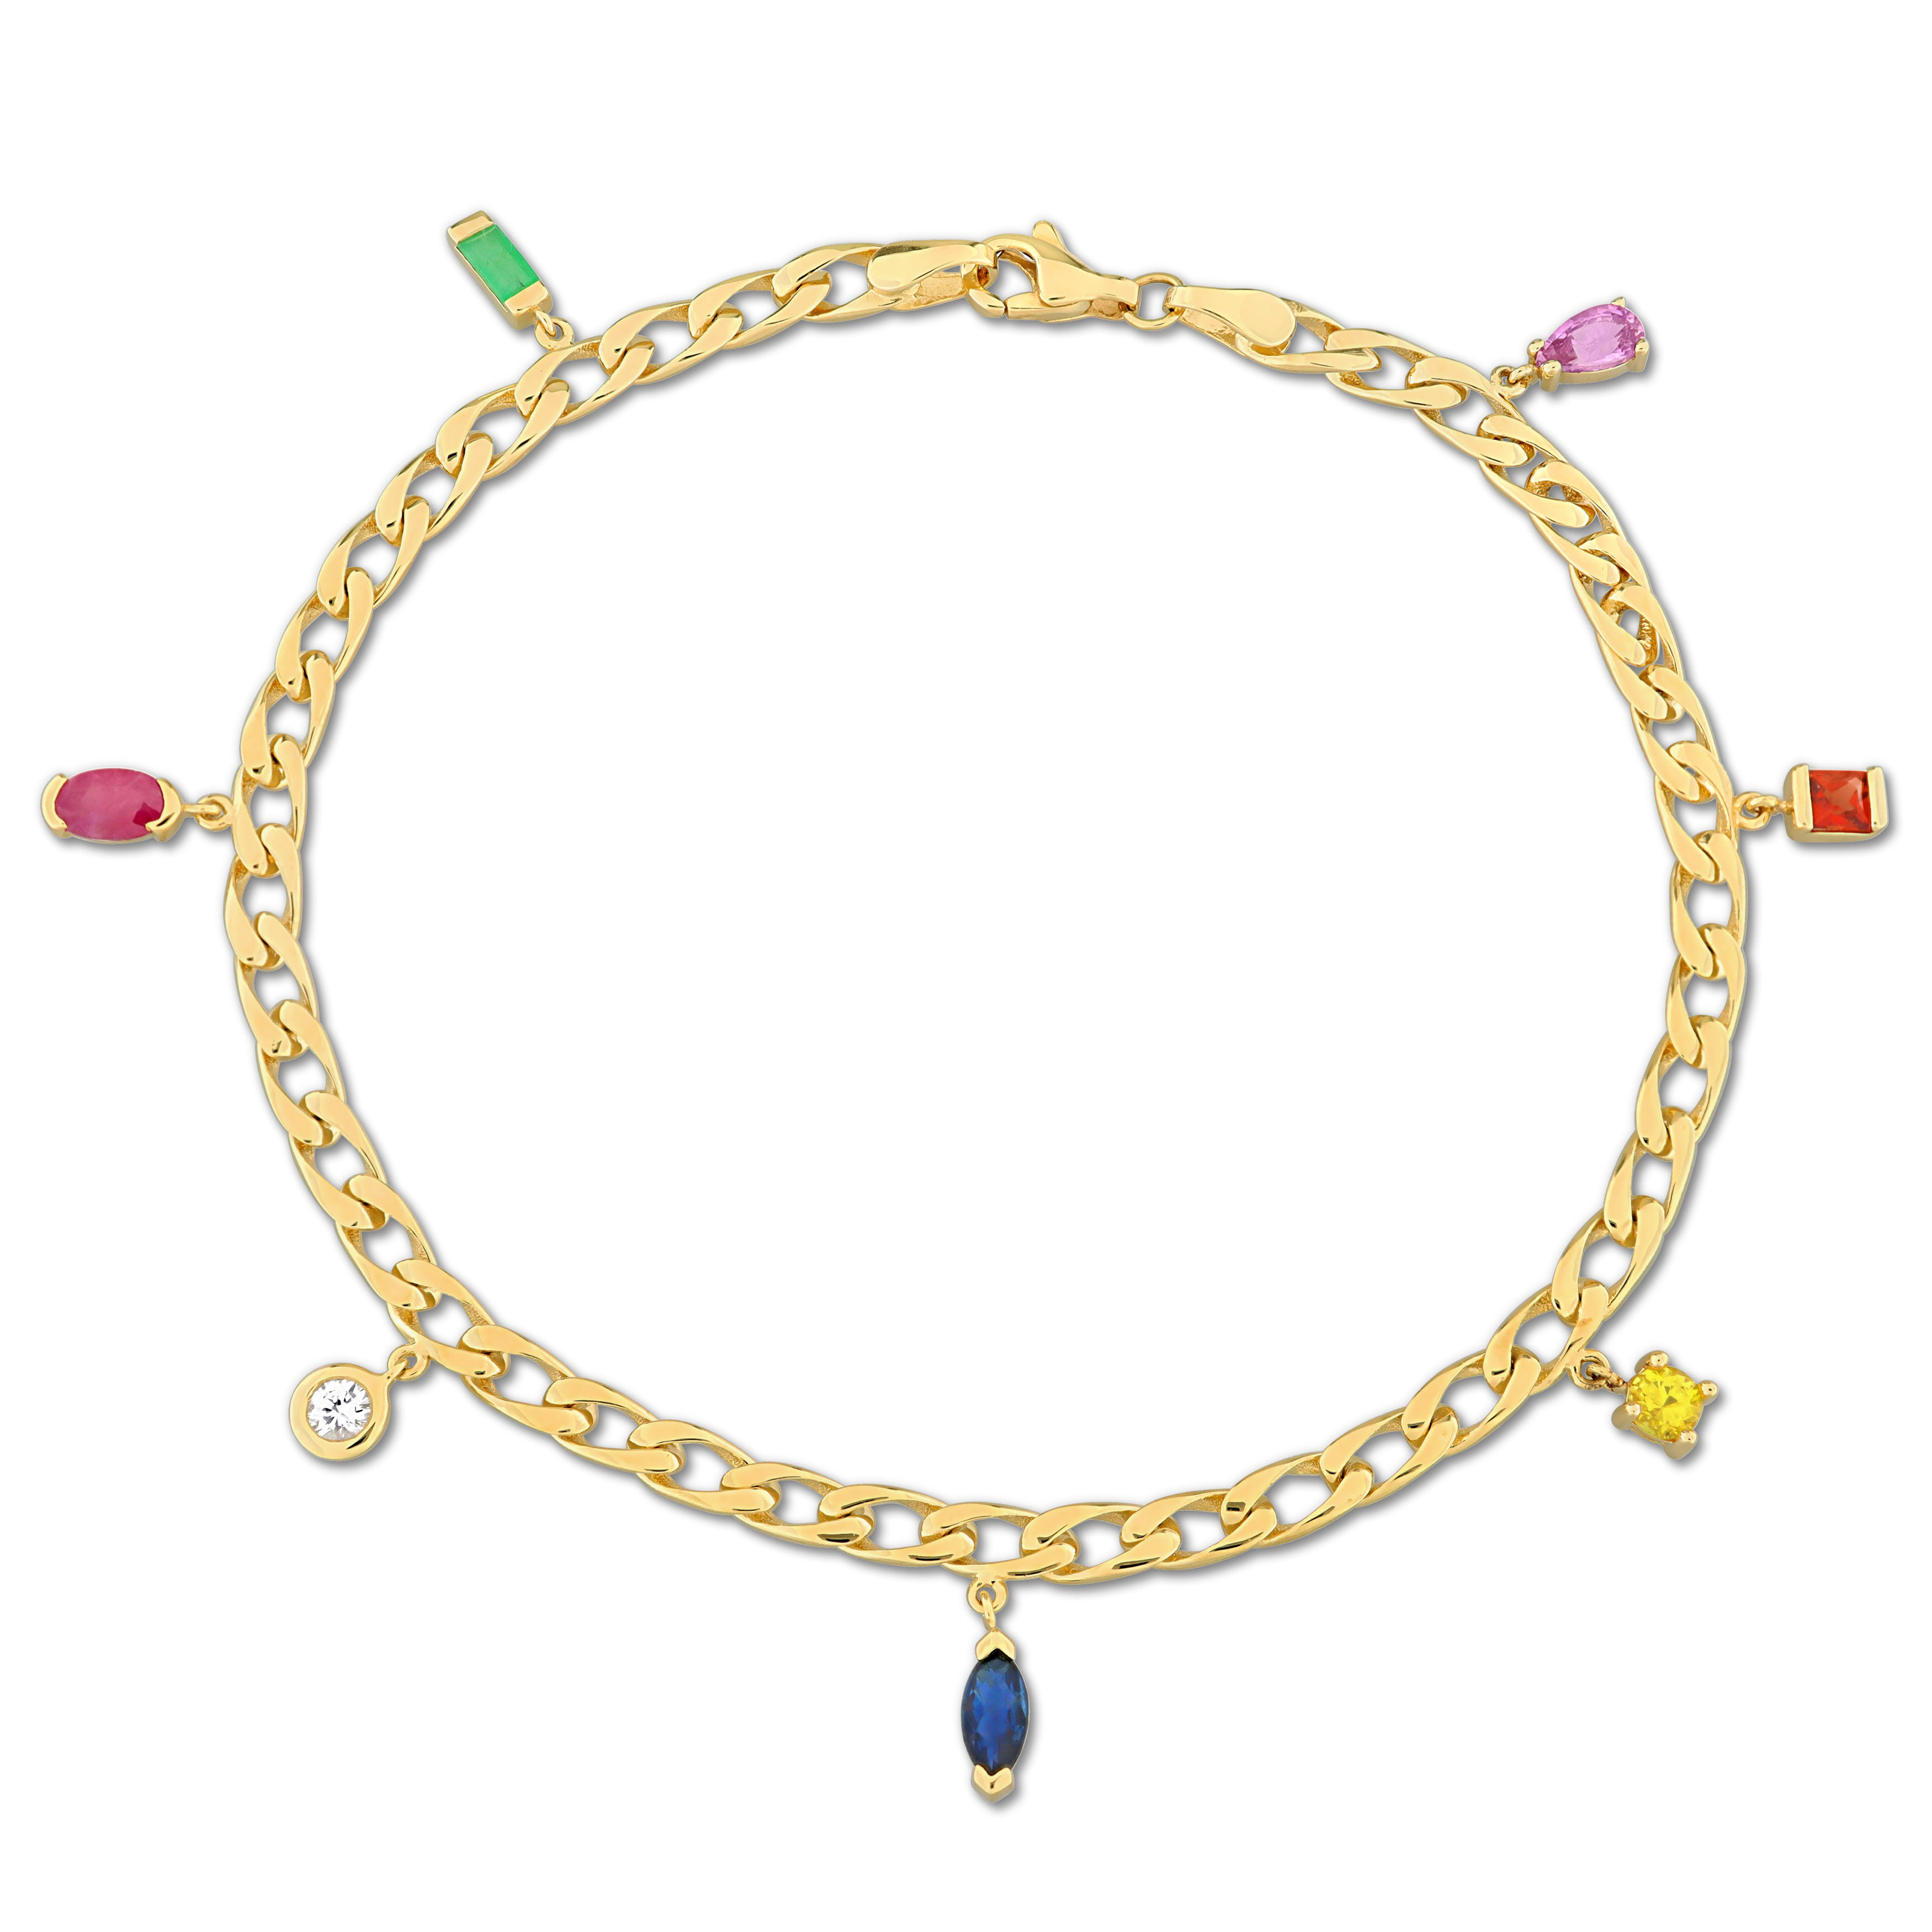 1 1/3 CT TGW Multi-Color Sapphire Ruby Emerald Charm Bracelet in 10k Yellow Gold - 7.5 in.